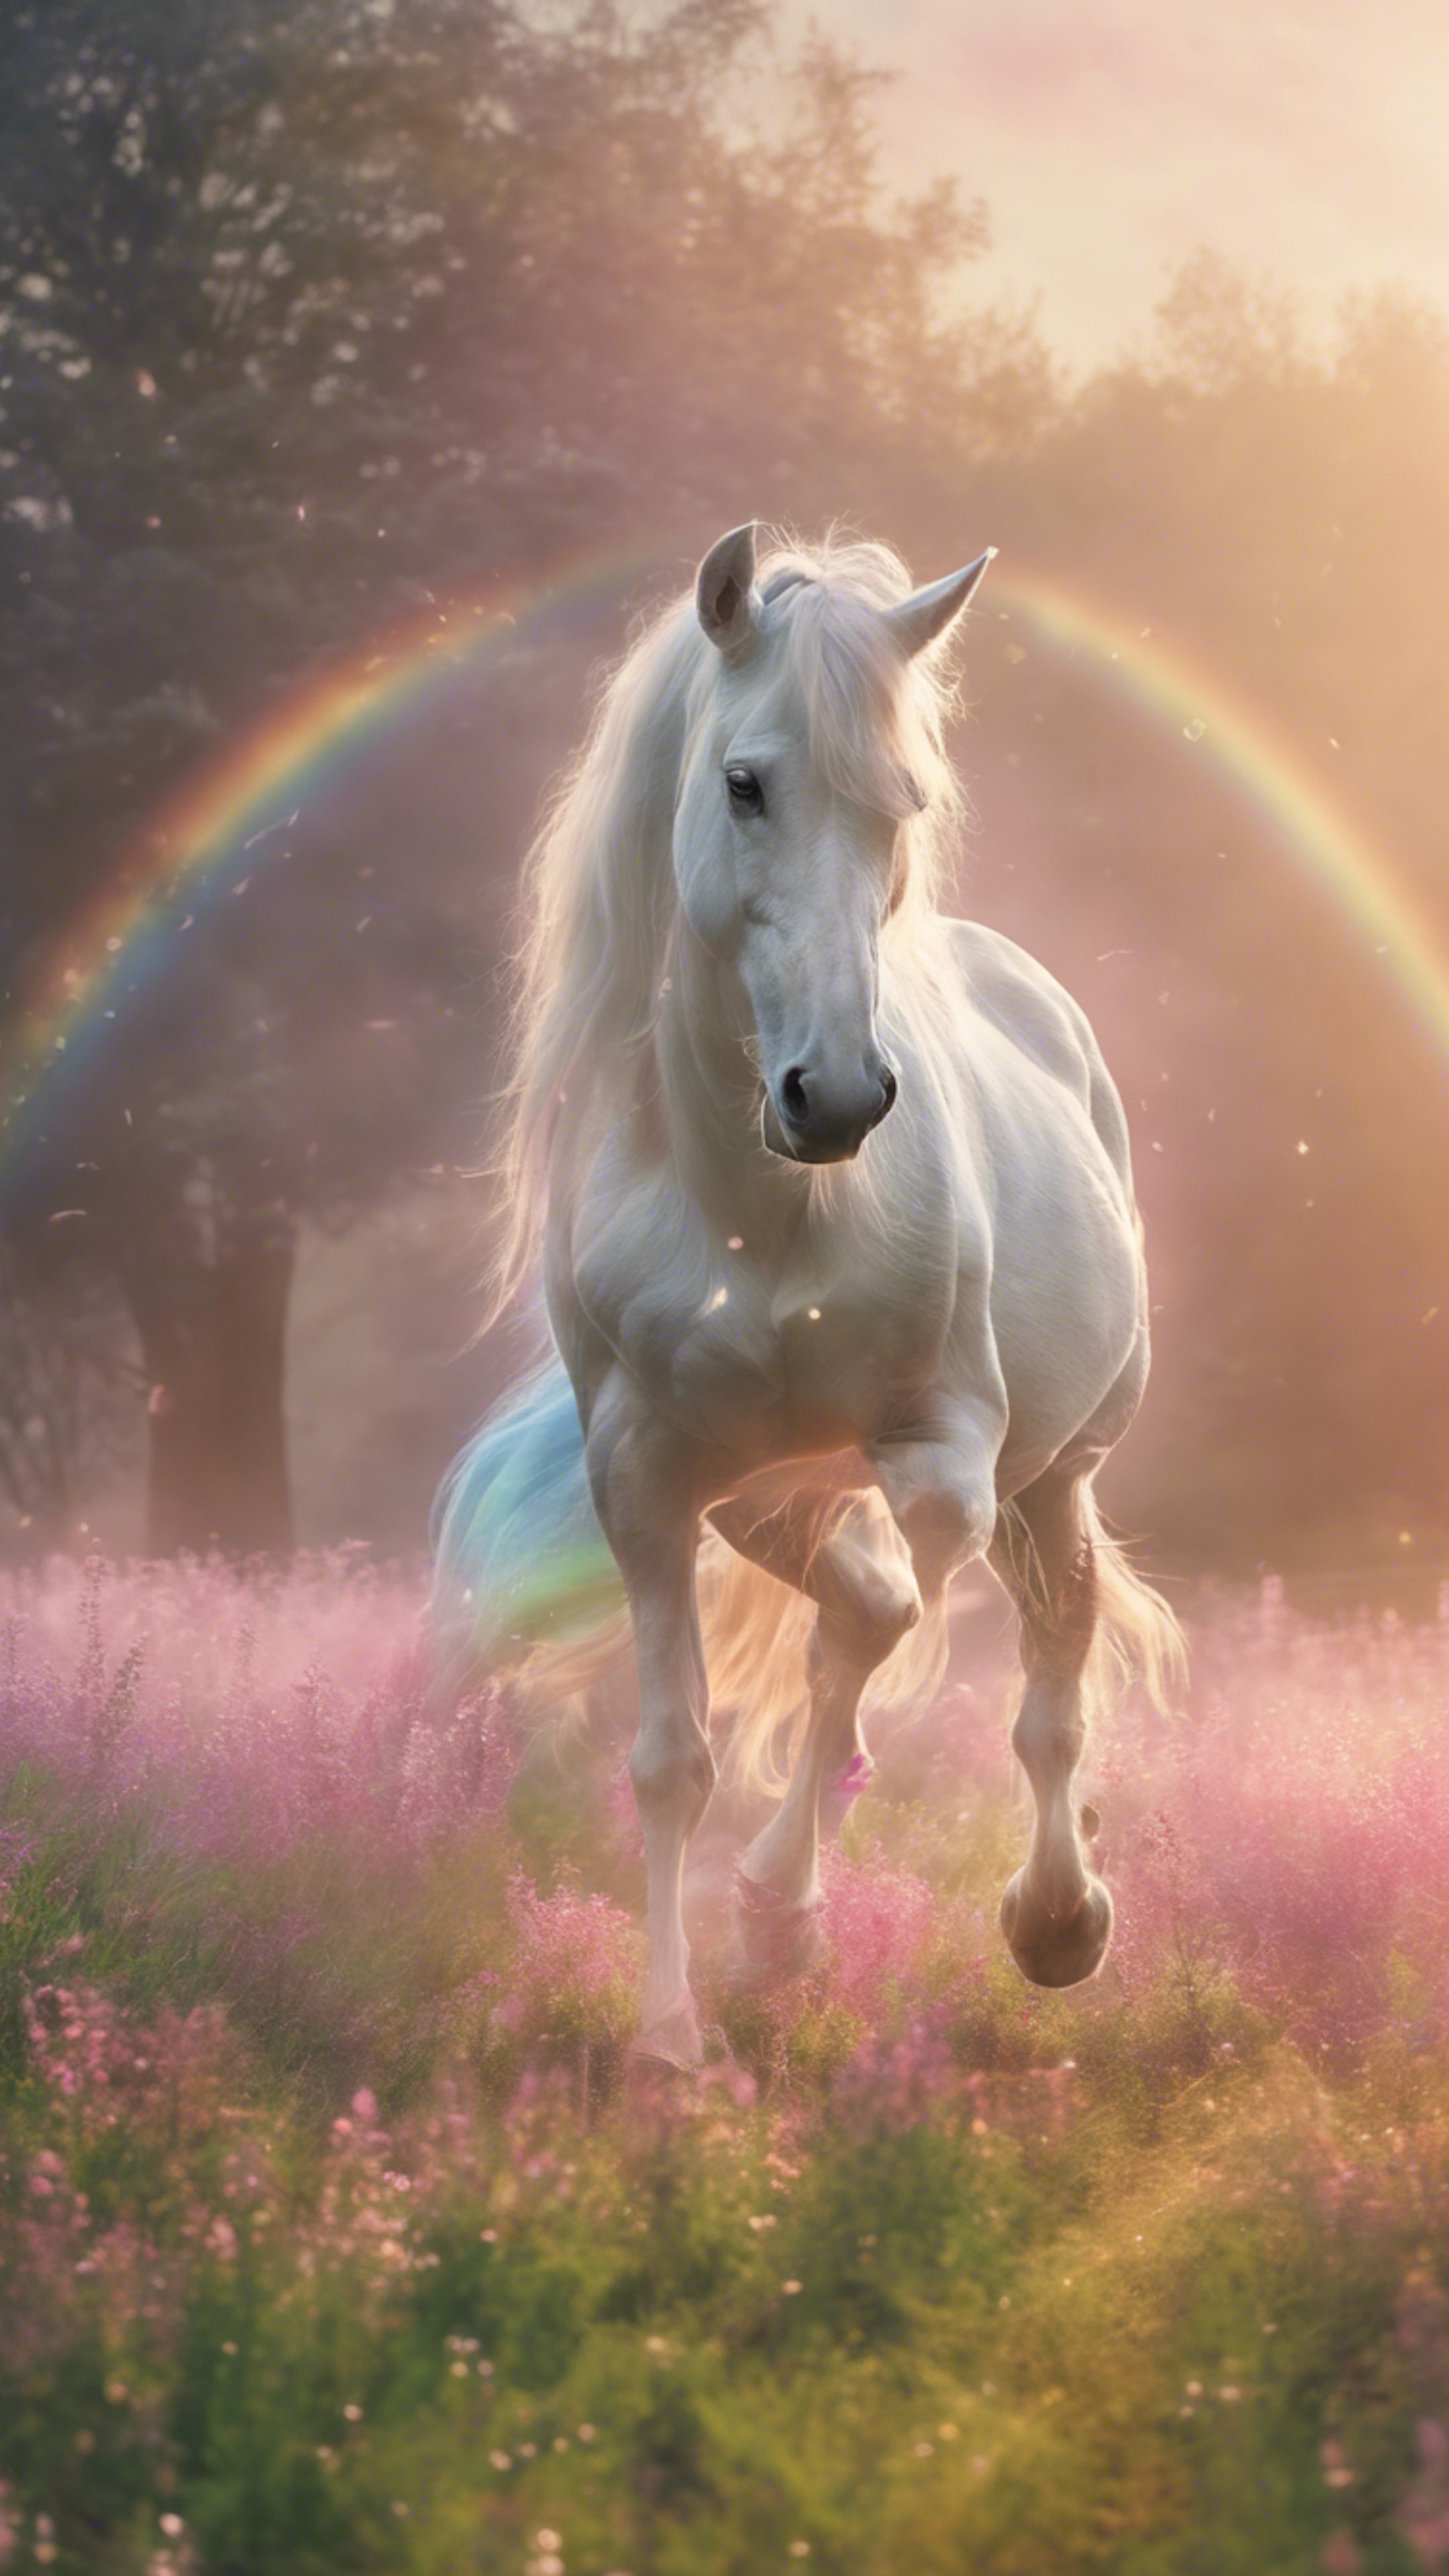 An enchanting unicorn prancing under a pastel rainbow in a verdant meadow during dawn.壁紙[3be206290ea649bdbe40]